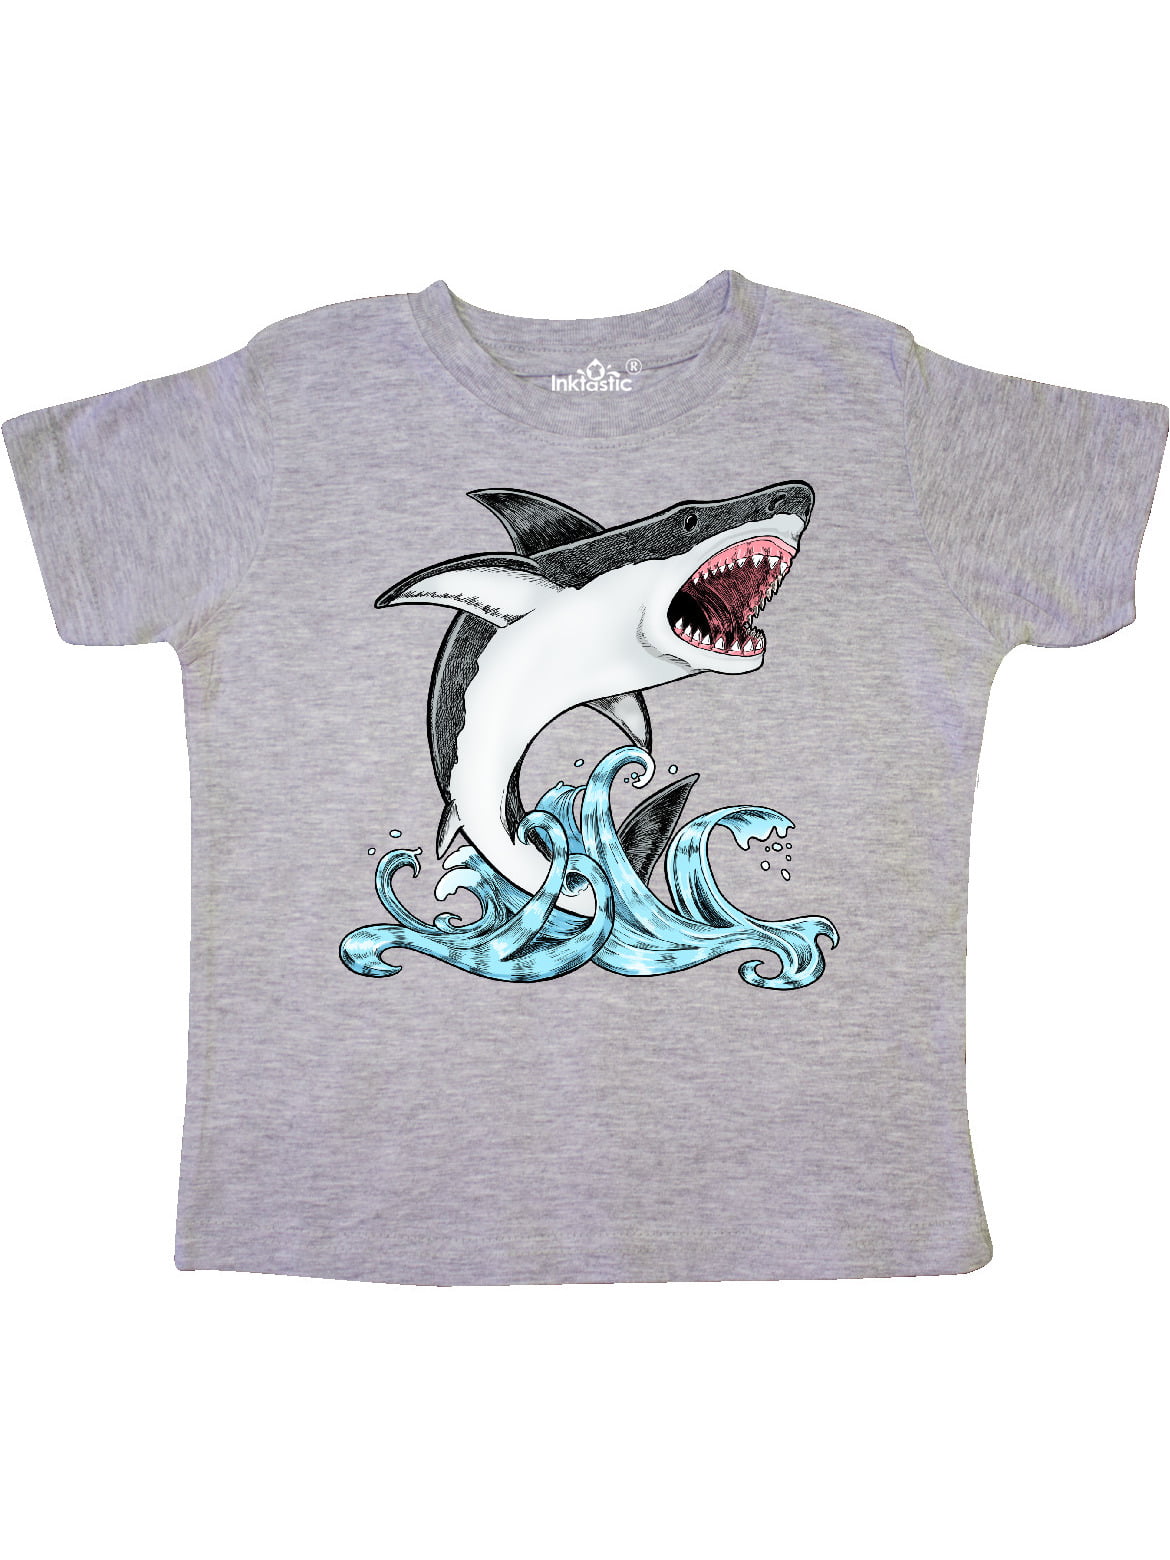 INKtastic - Great White Shark Jumping Toddler T-Shirt - Walmart.com ...